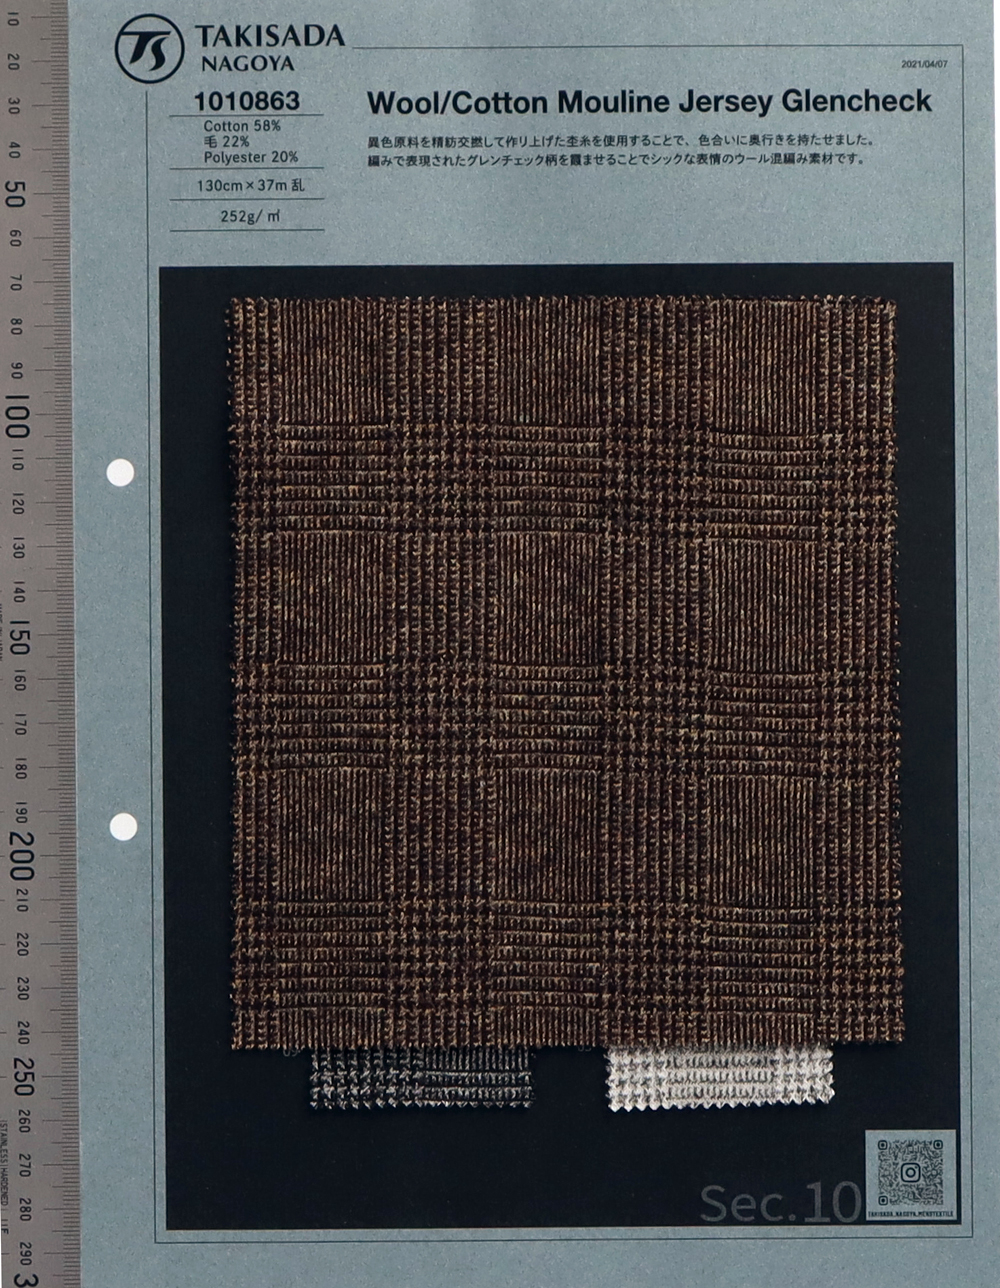 1010863 Lana / Algodón Murine Jersey Glen Check[Fabrica Textil] Takisada Nagoya